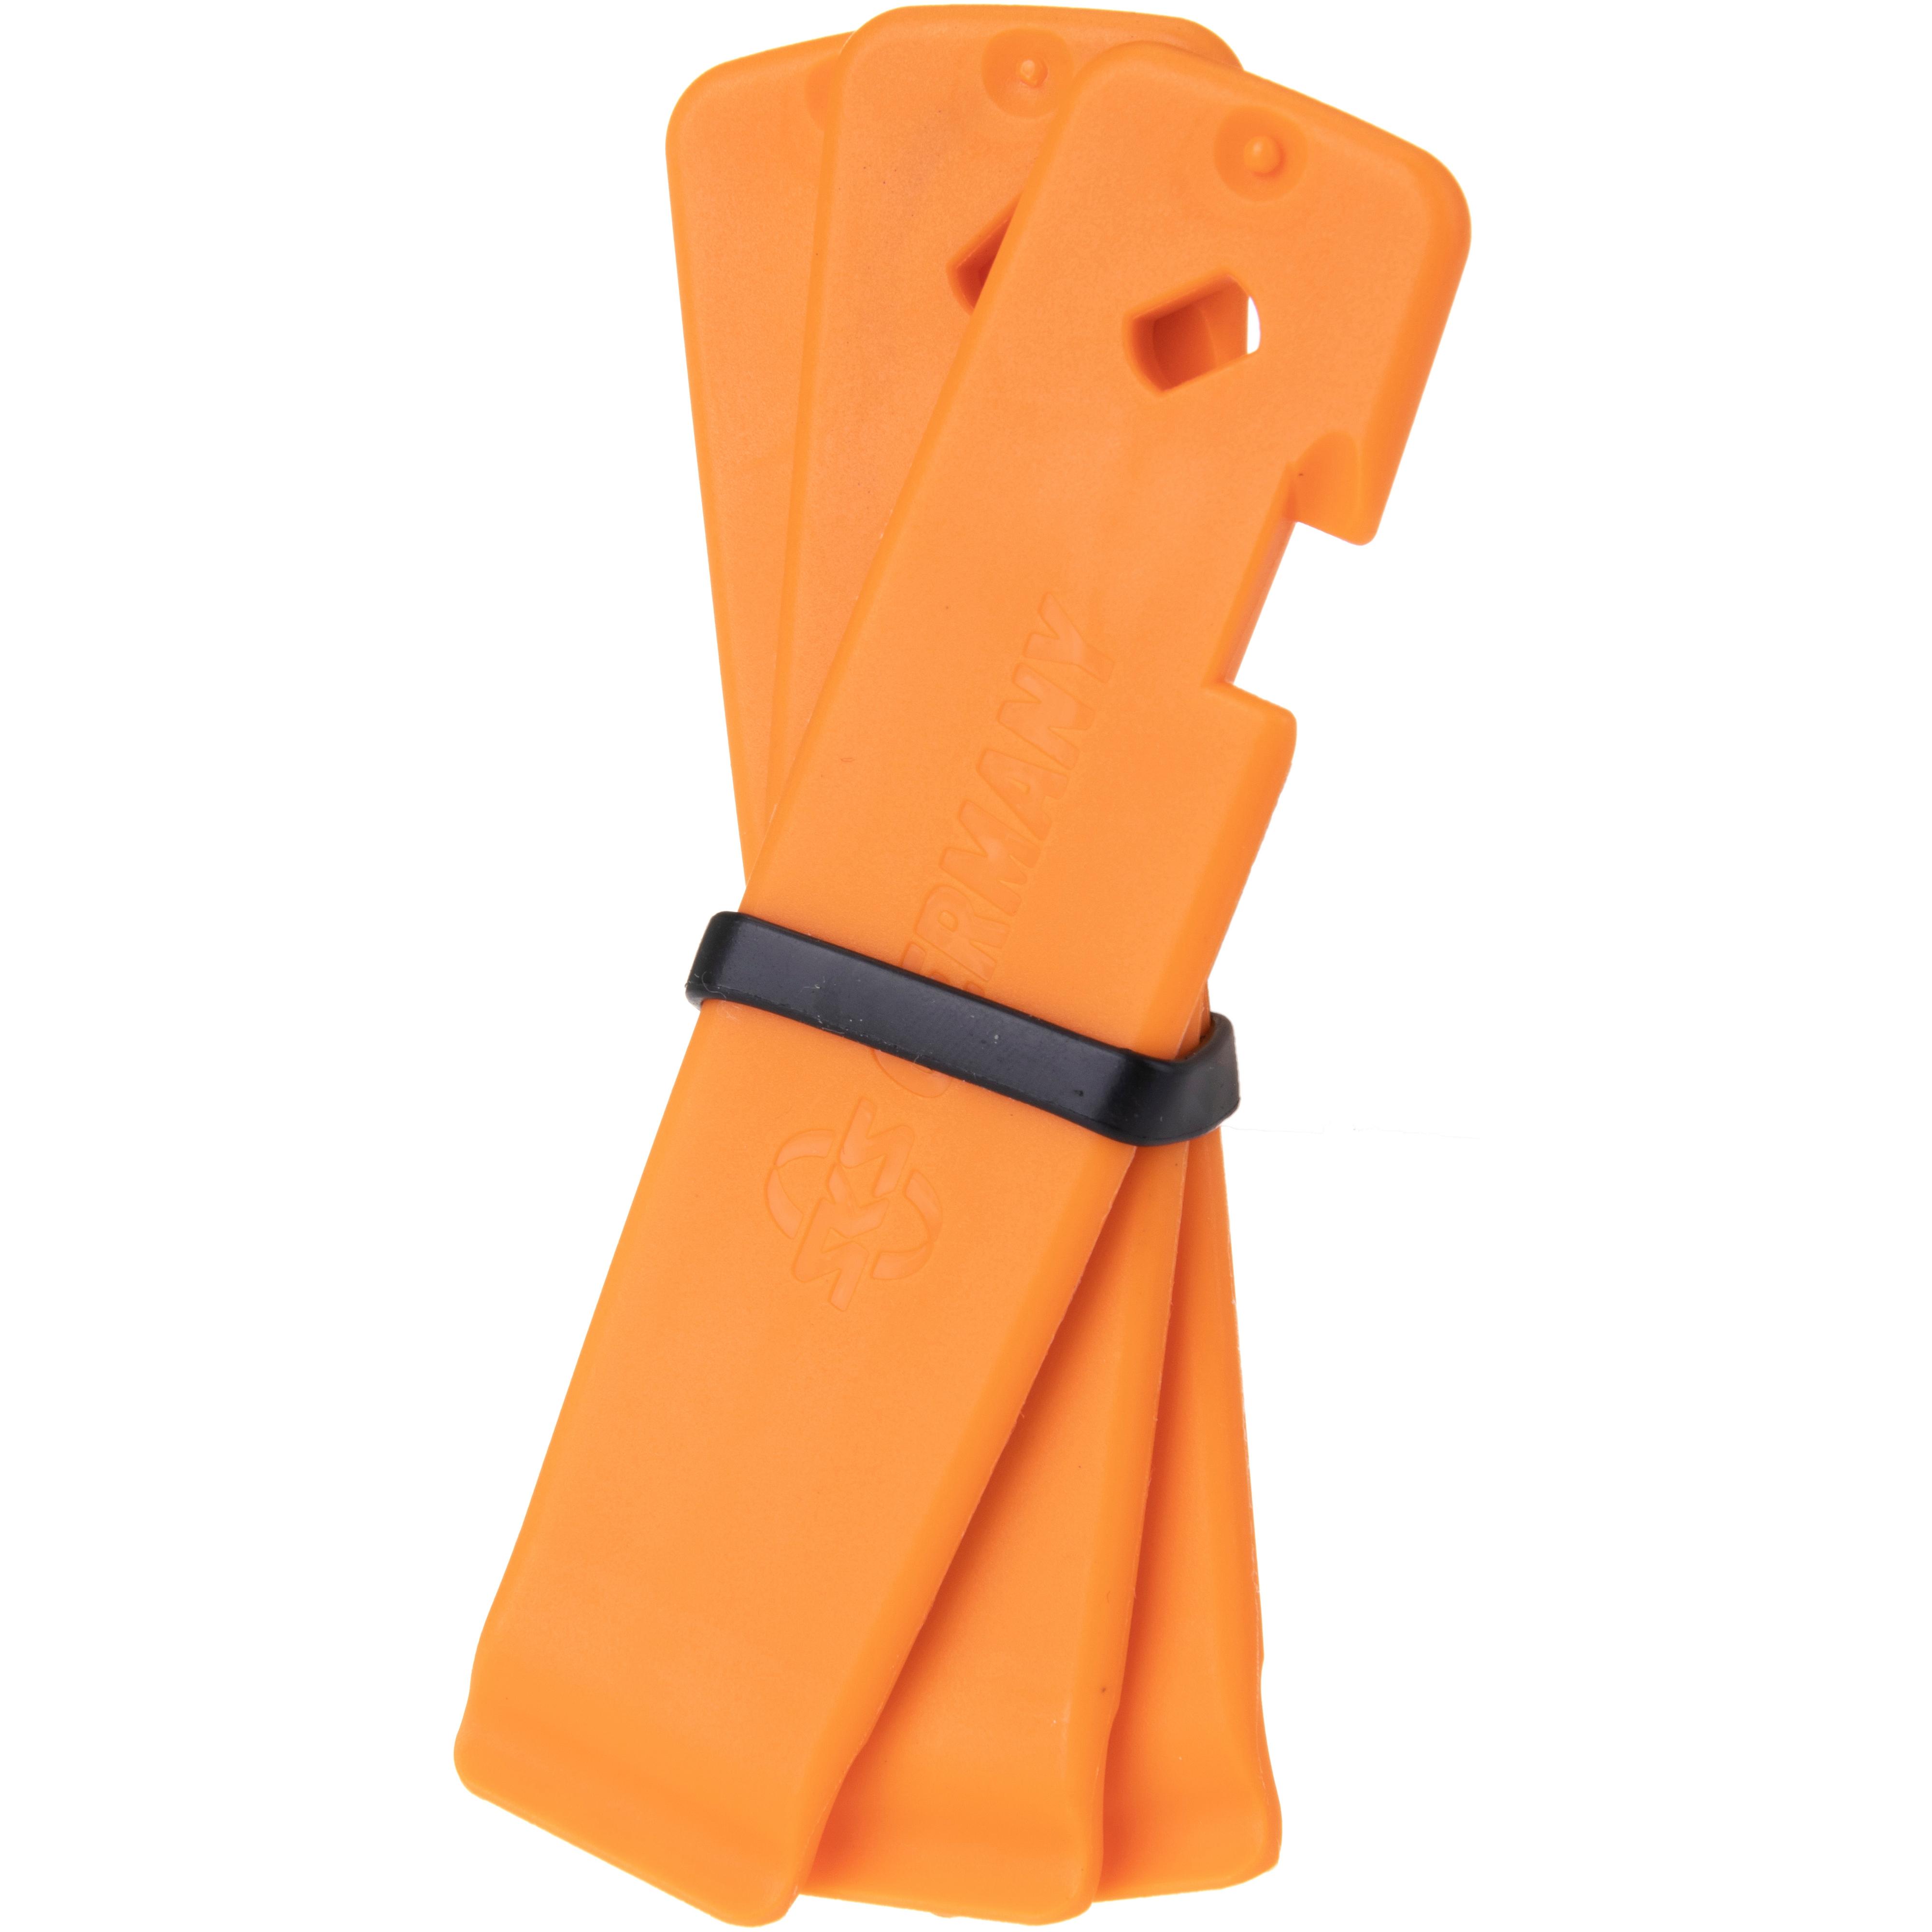 Image of SKS Germany LEVERMEN Reifenheber-Set 3er orange Werkzeug